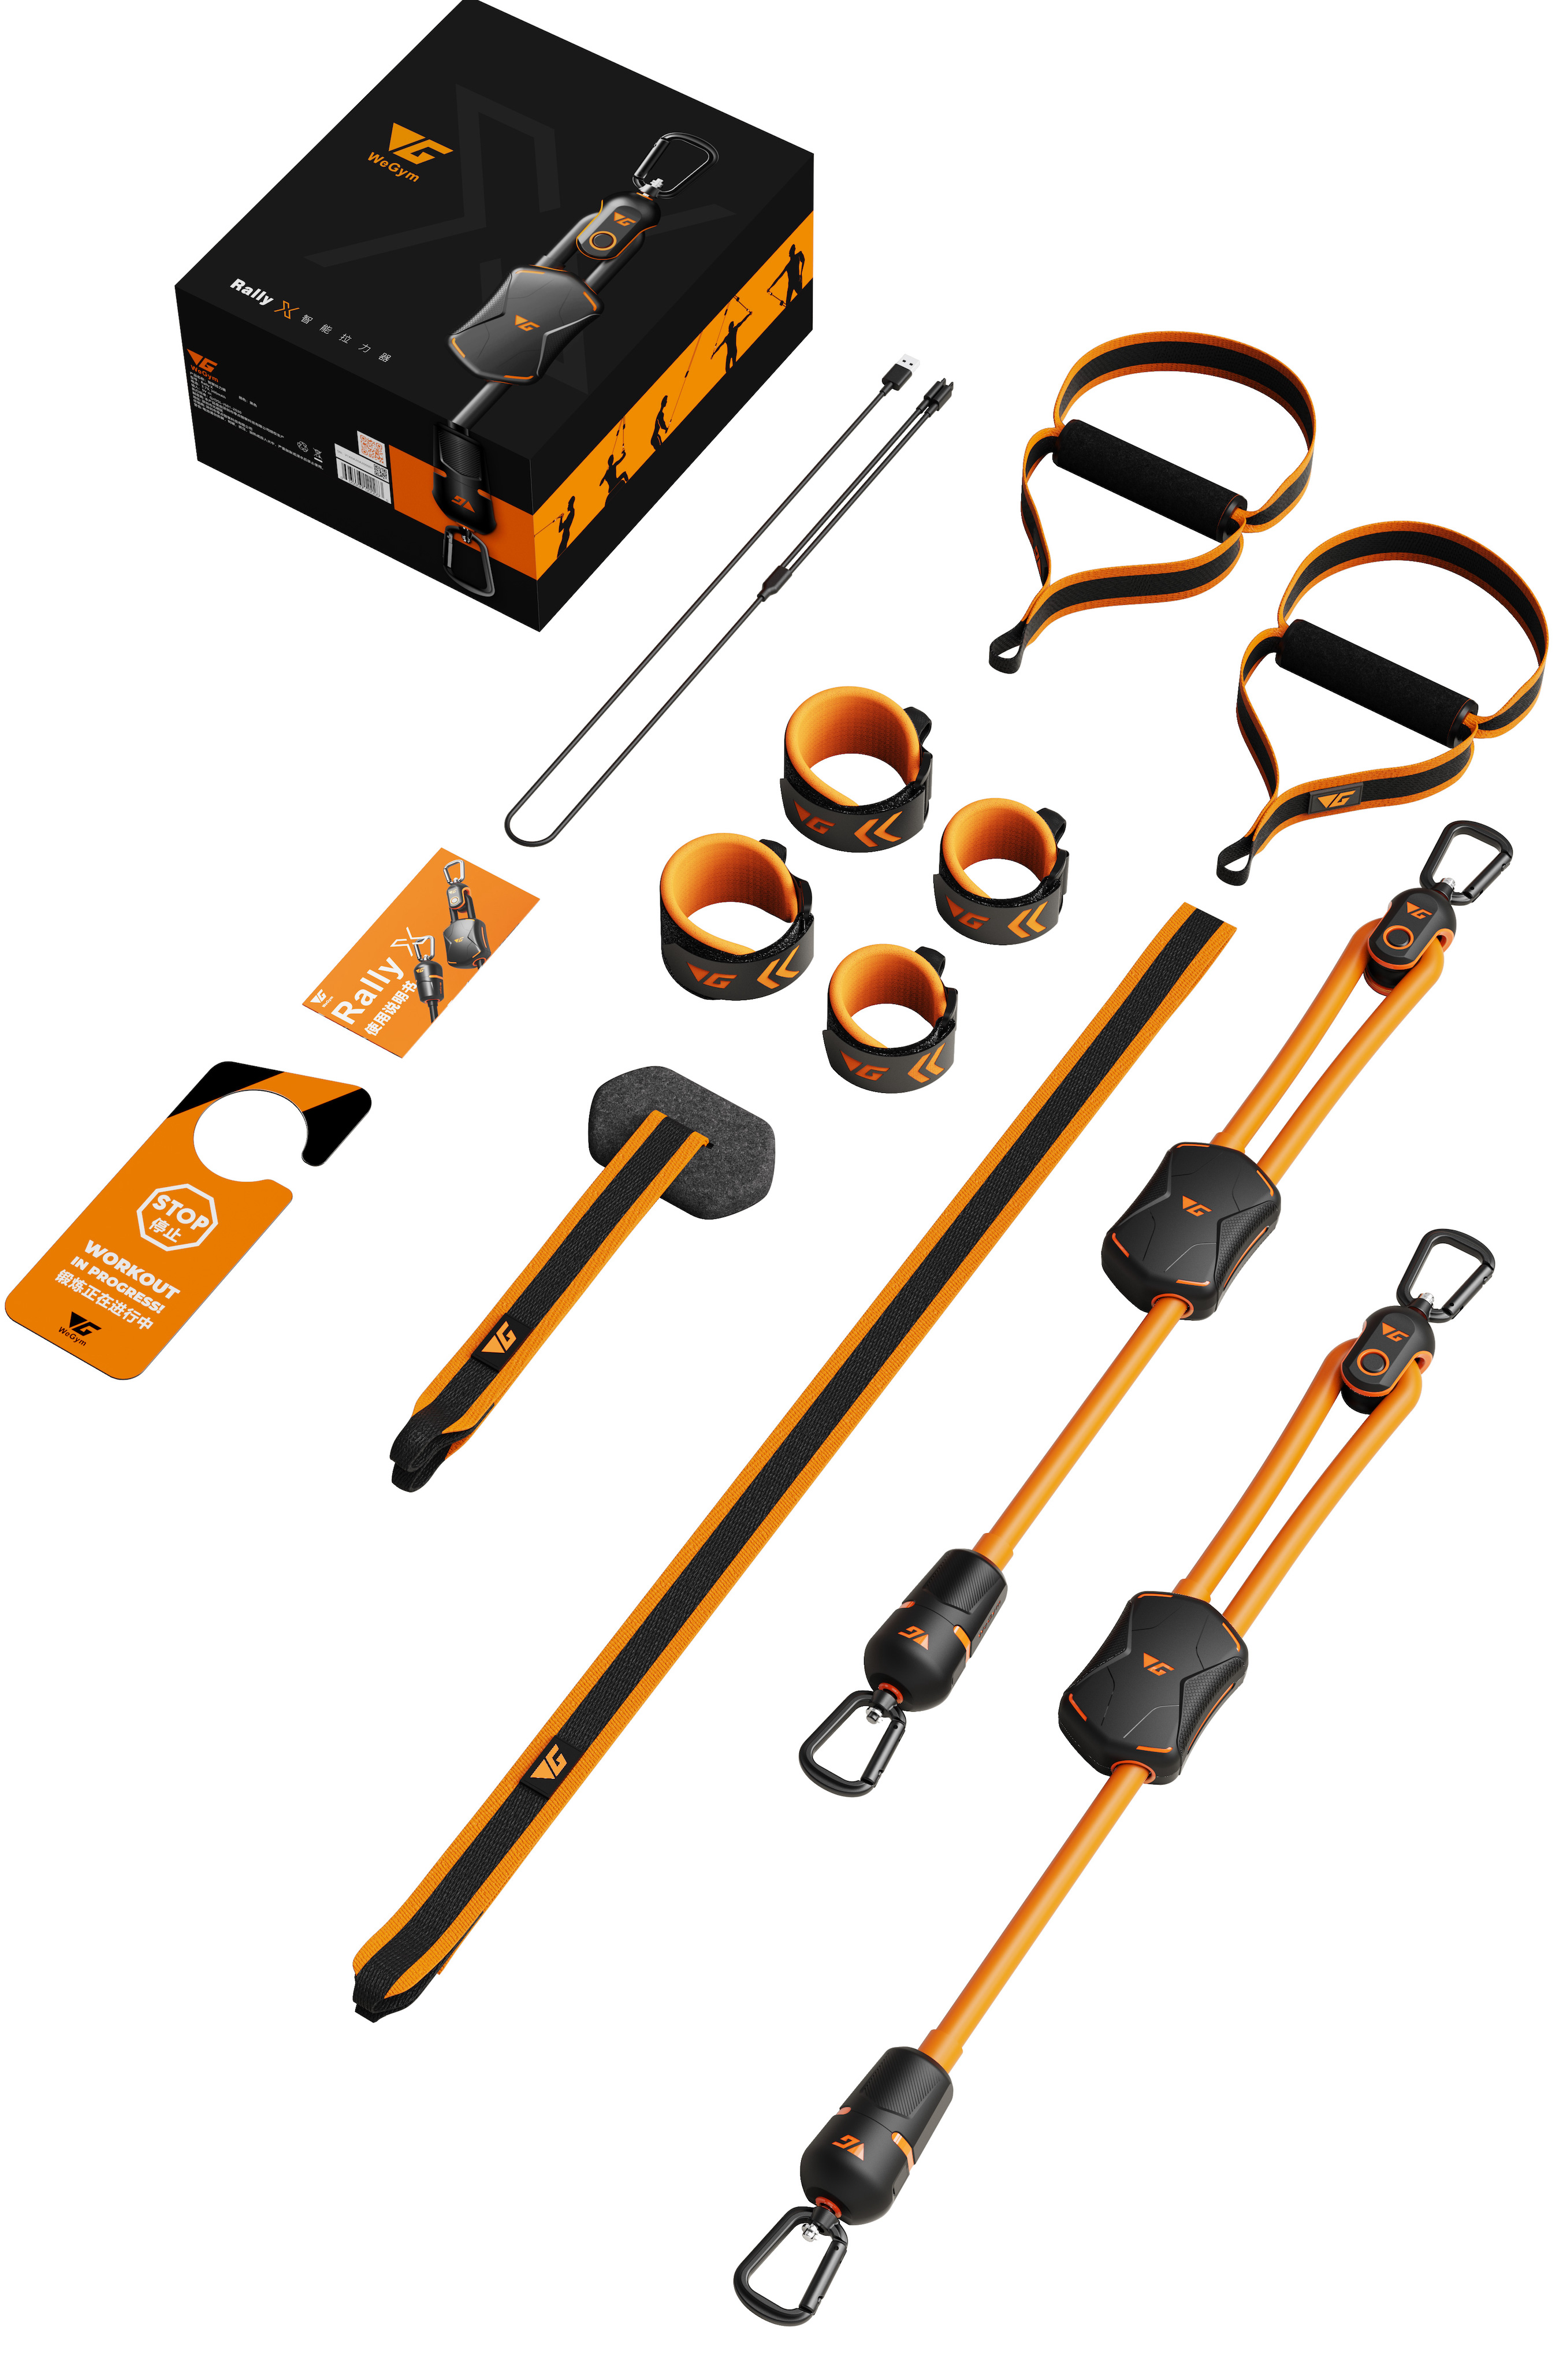 WeGym Rally X smart resistance bands kit.